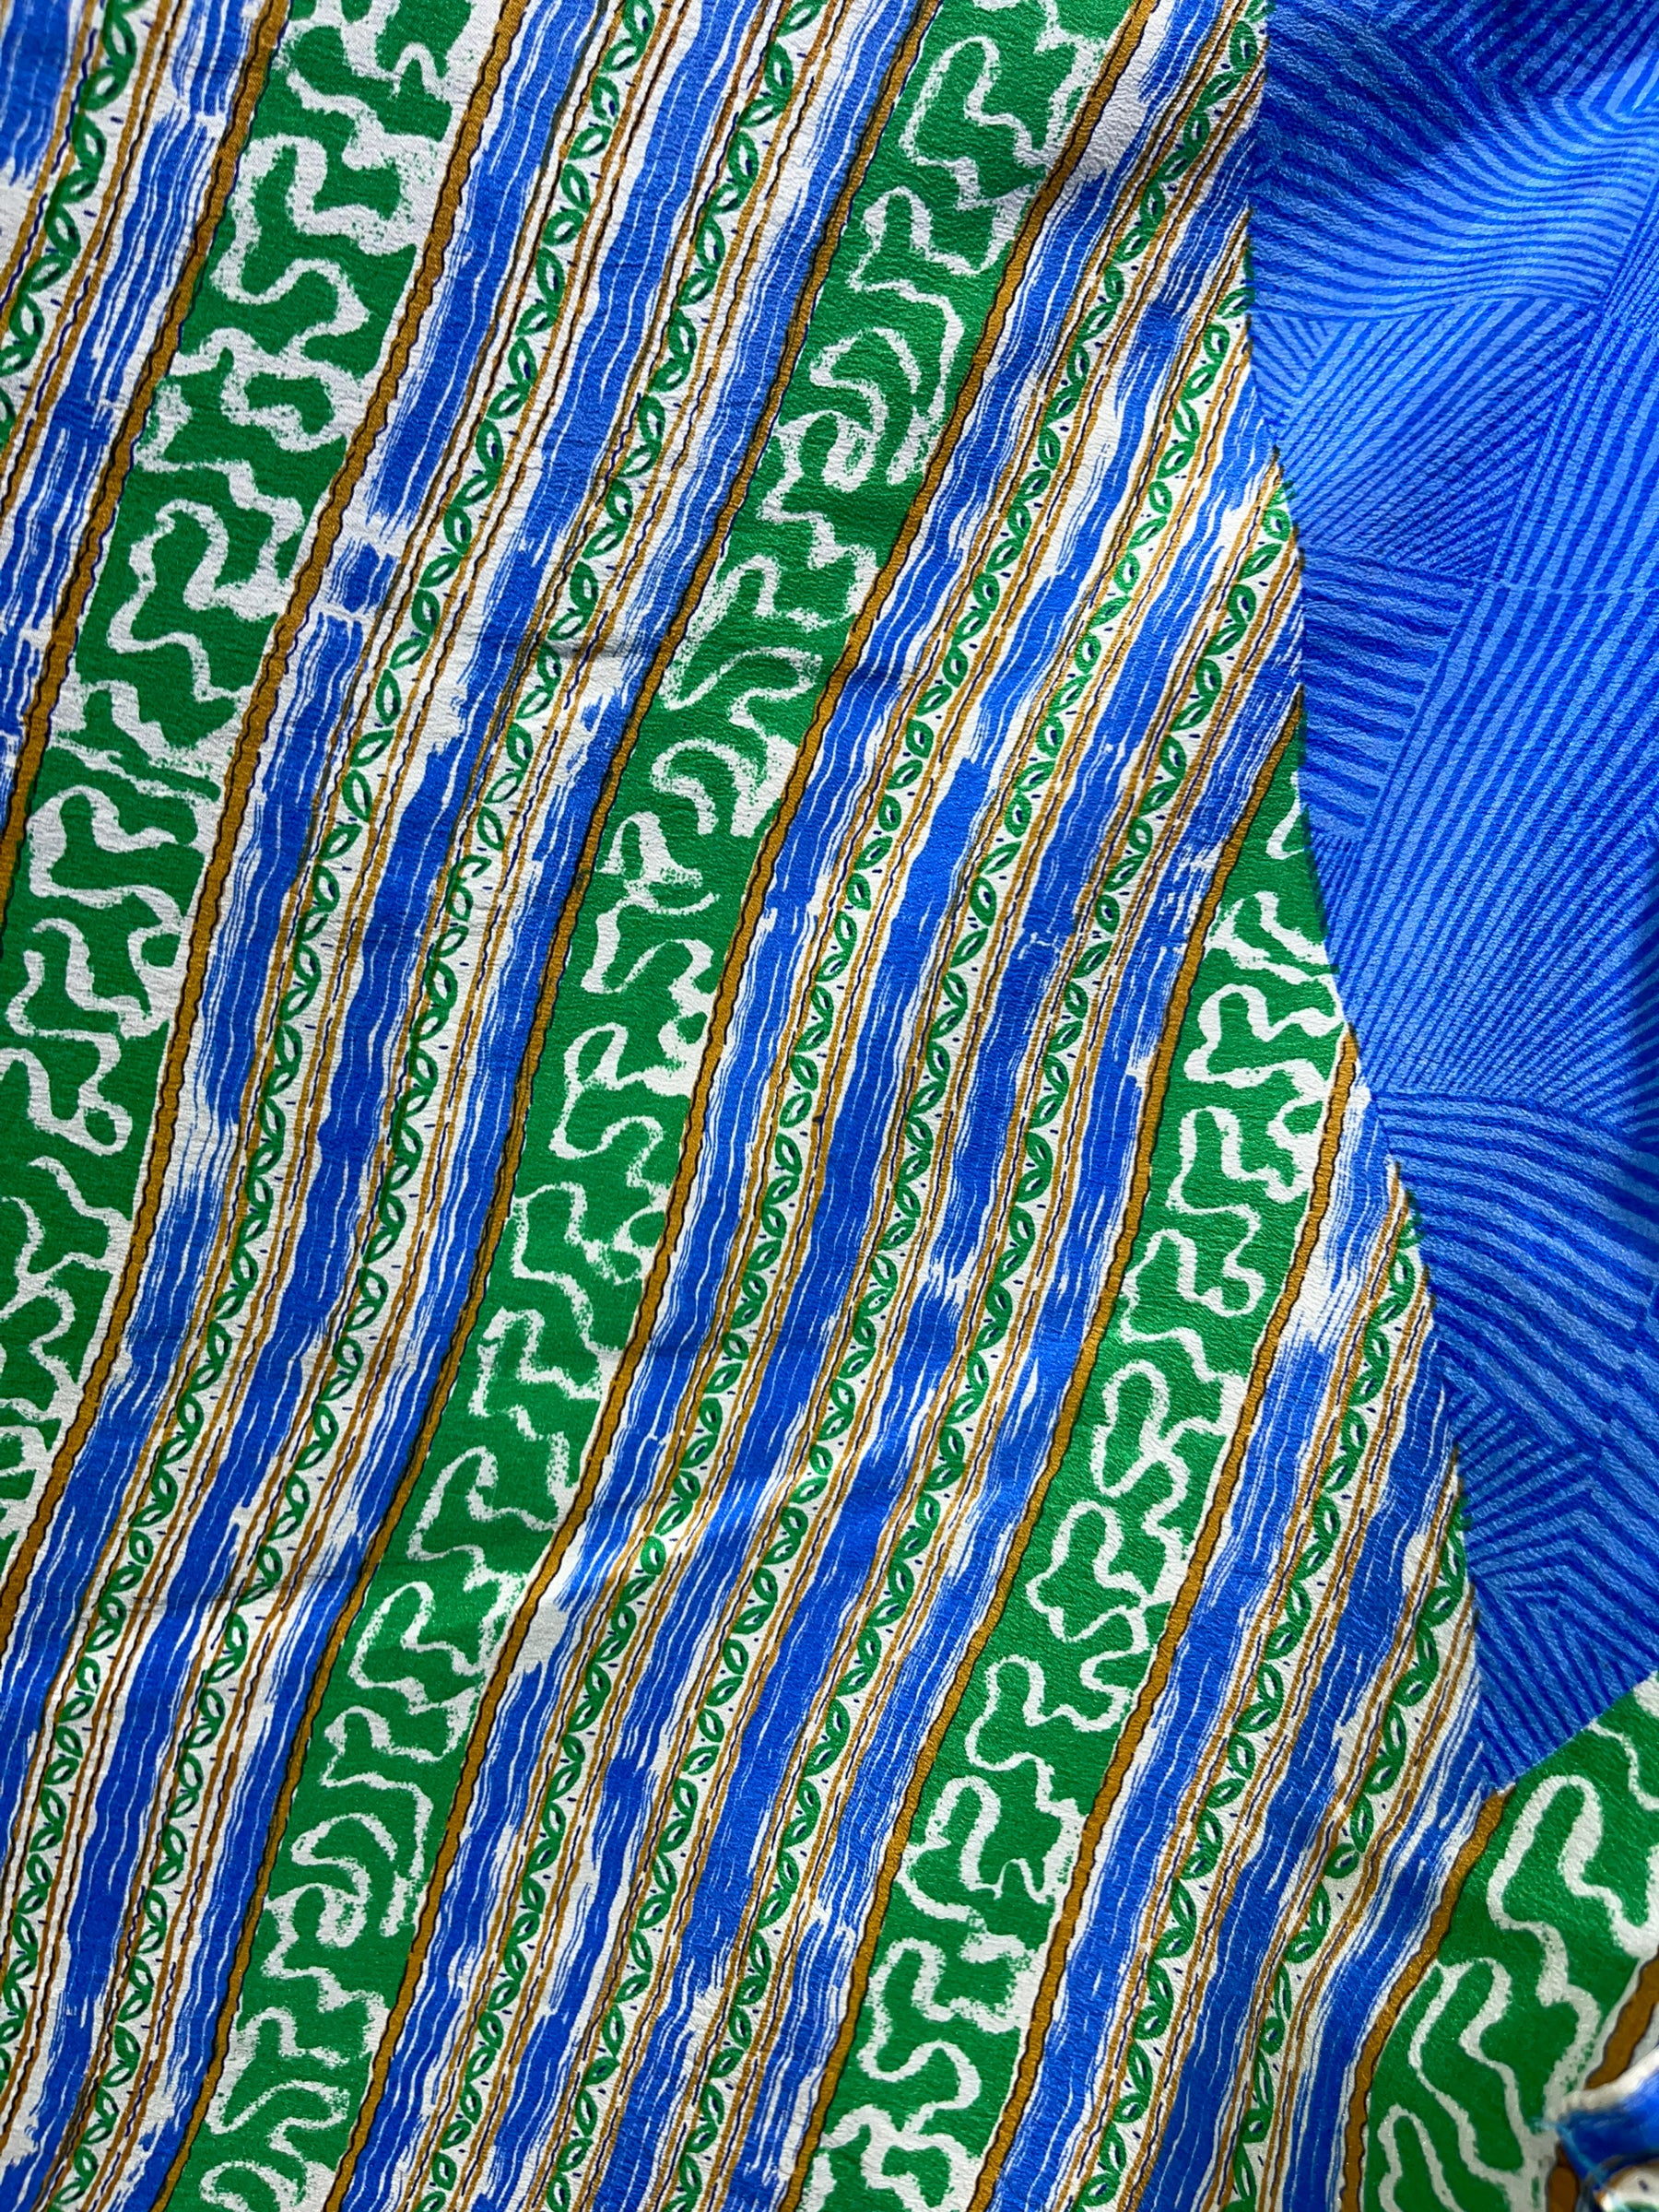 PRC3248 Avatar Pure Silk Maxi Dress with Belt